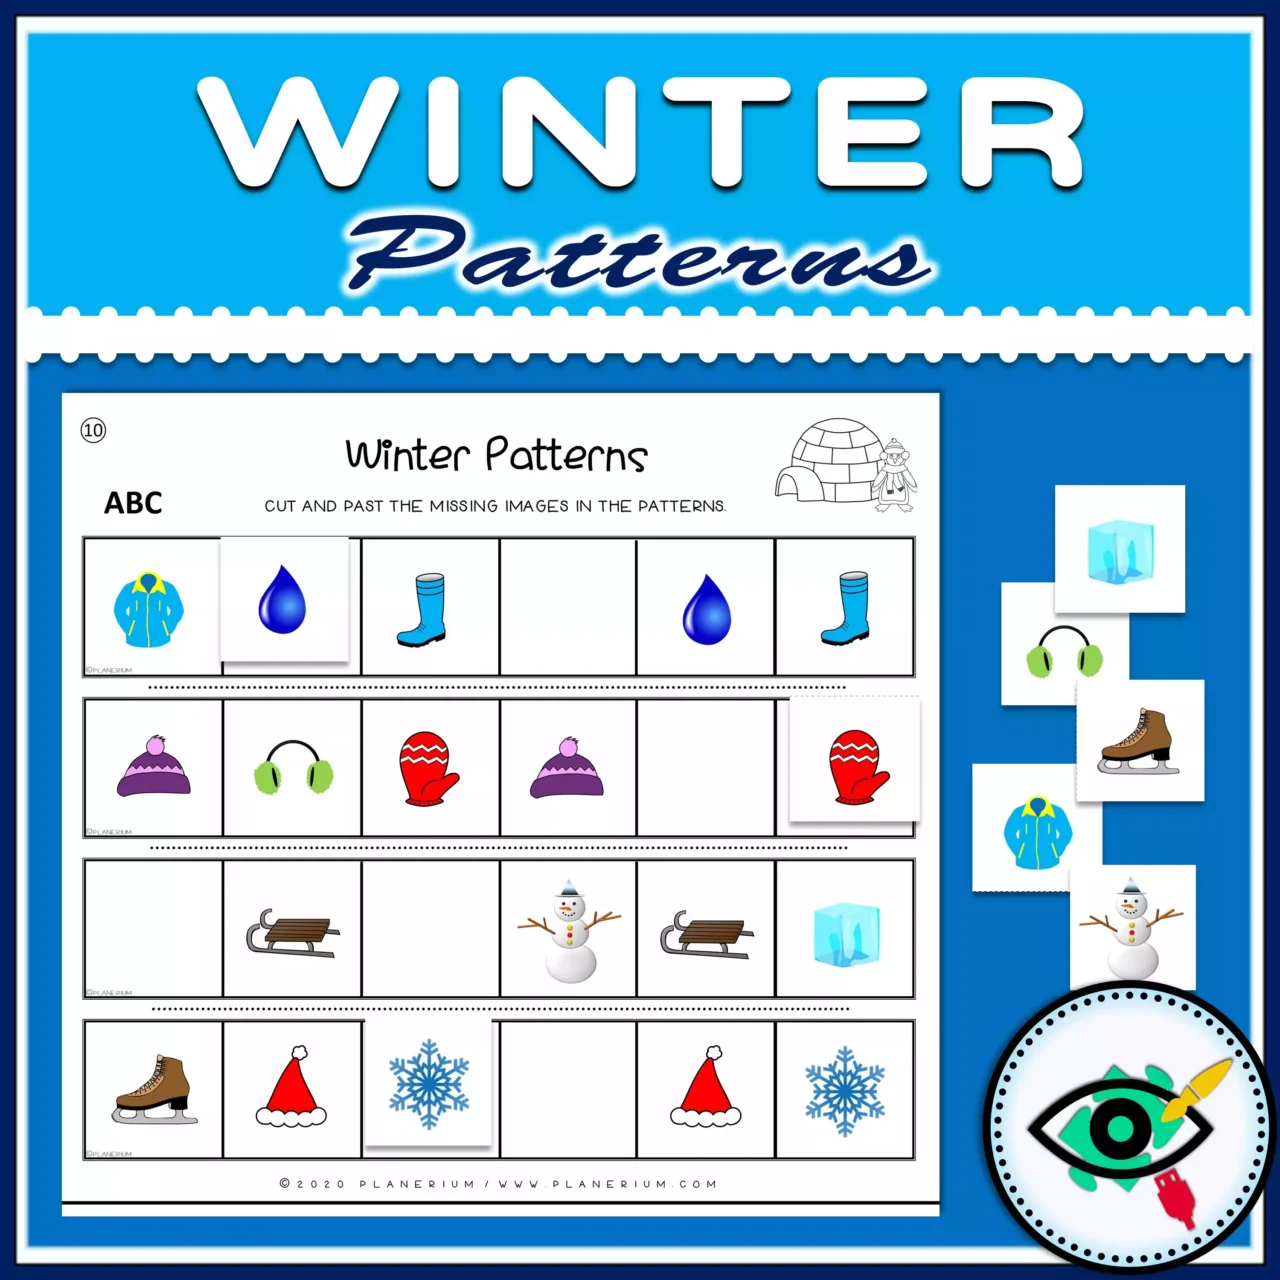 Winter - Patterns Activity - Image Title 7